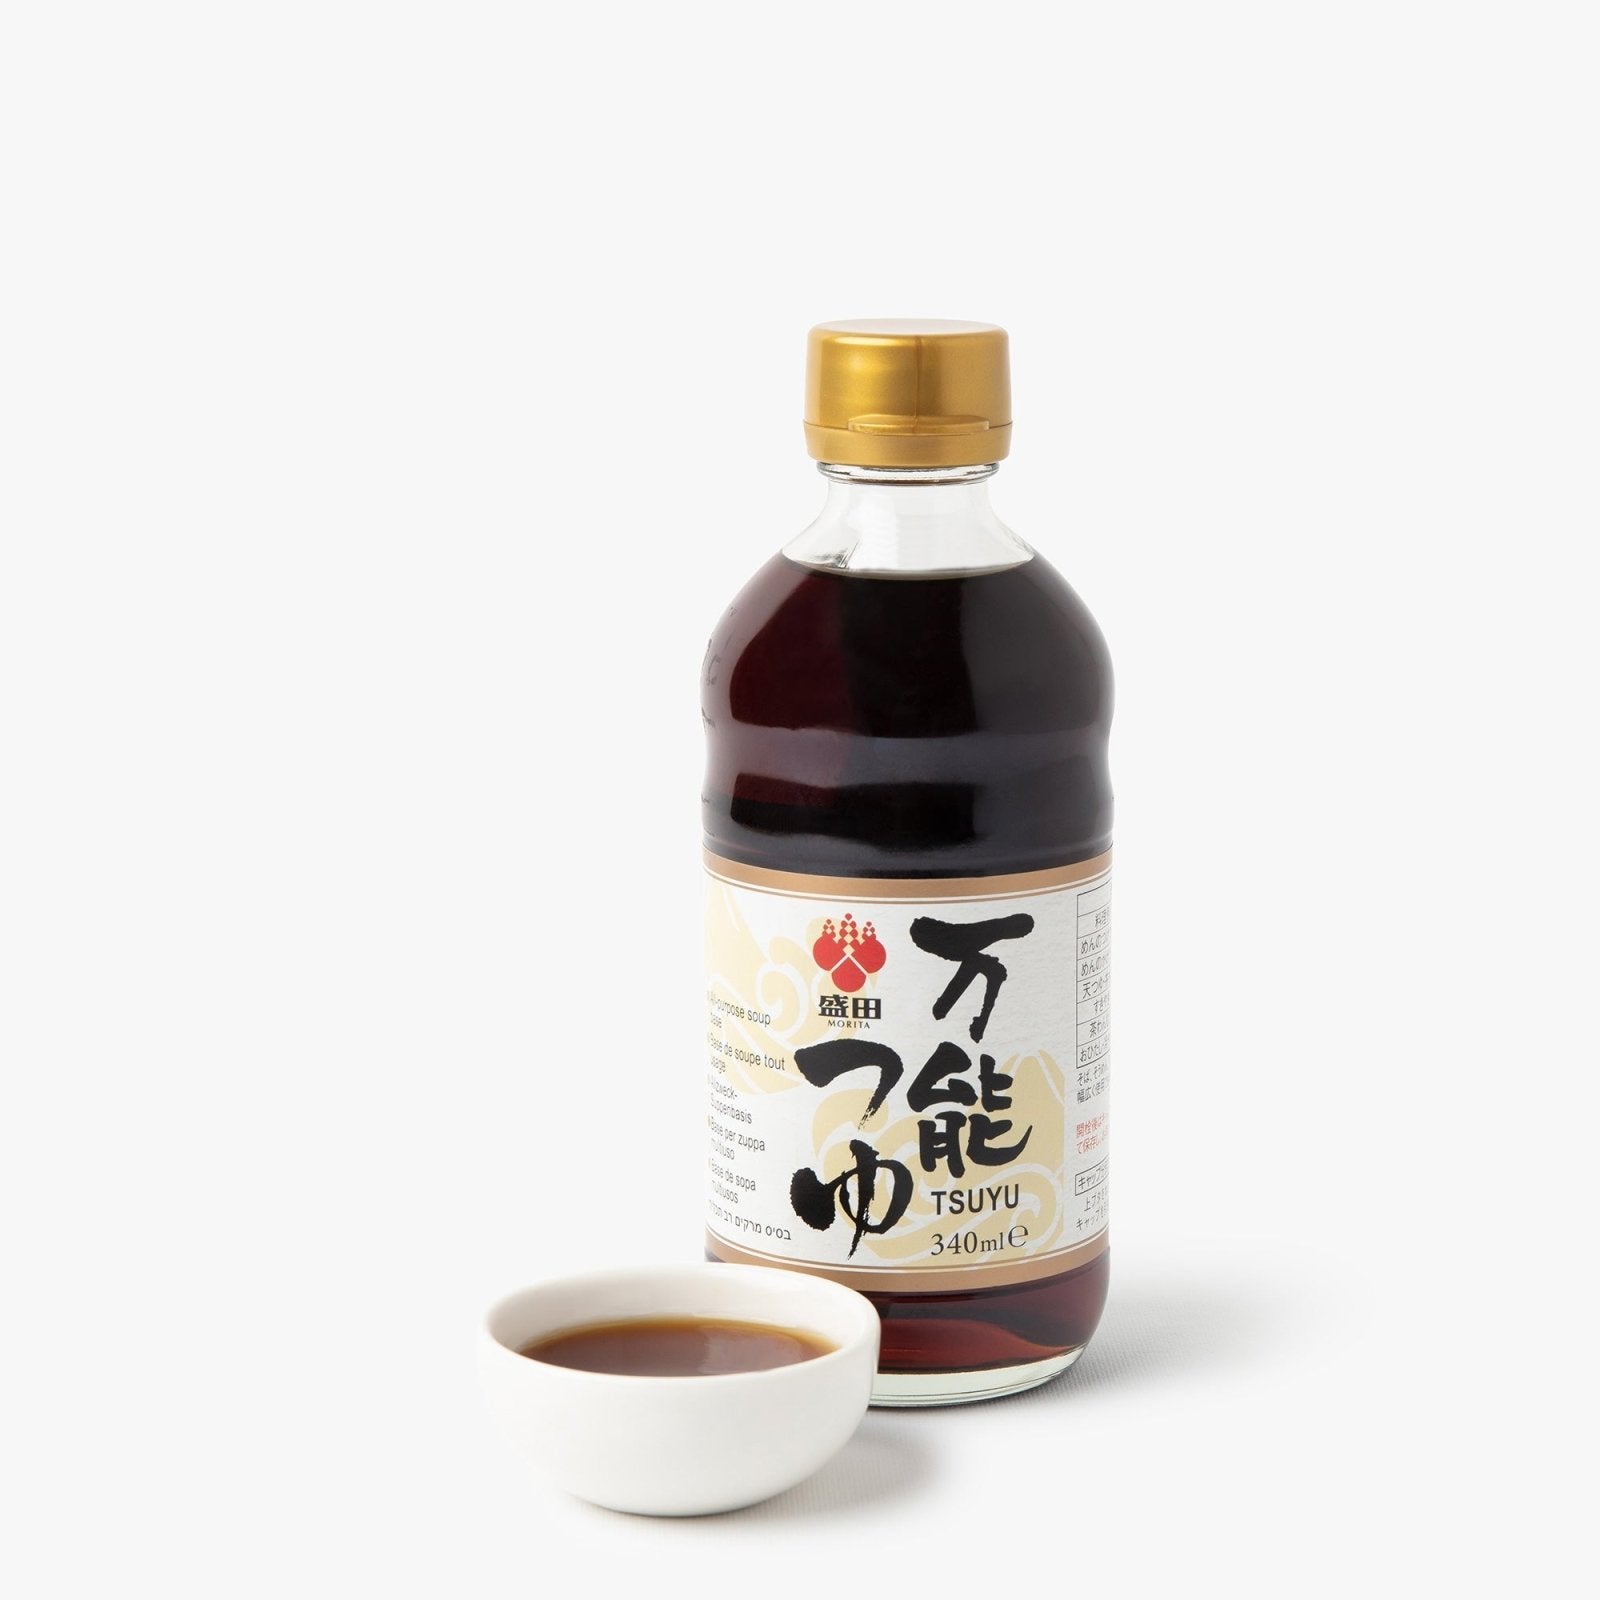 Sauce tsuyu concentrée - 340ml - Morita - iRASSHAi